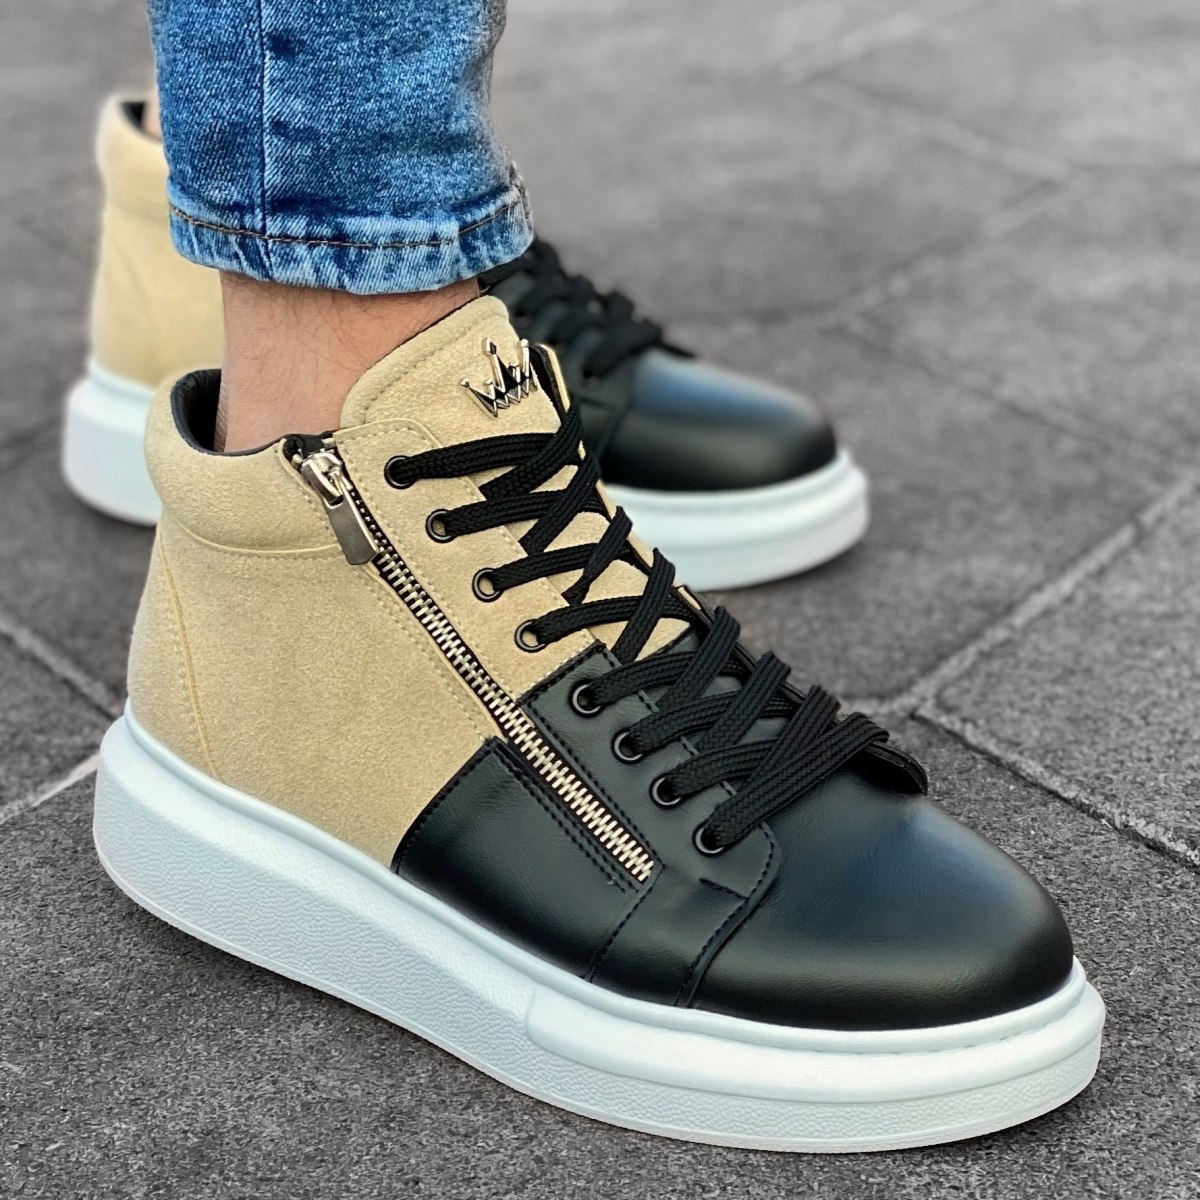 945 Nervesammenbrud sensor Men's High Top Sneakers Designer Zipper Shoes Cream-Black